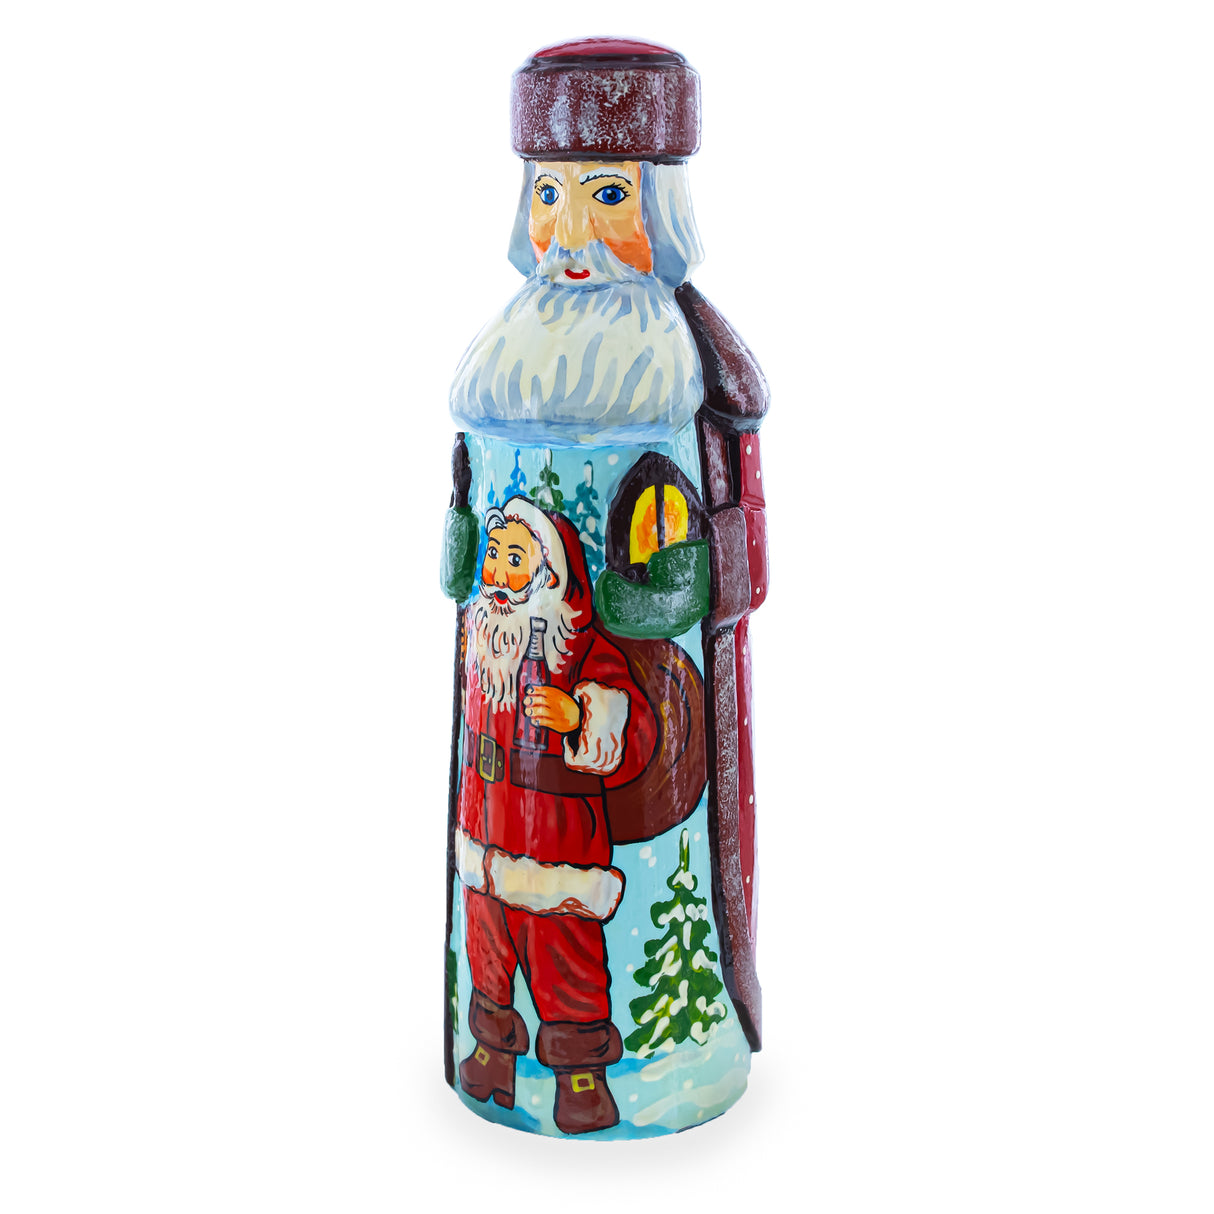 Buy Christmas Decor Carved Wooden Santa by BestPysanky Online Gift Ship